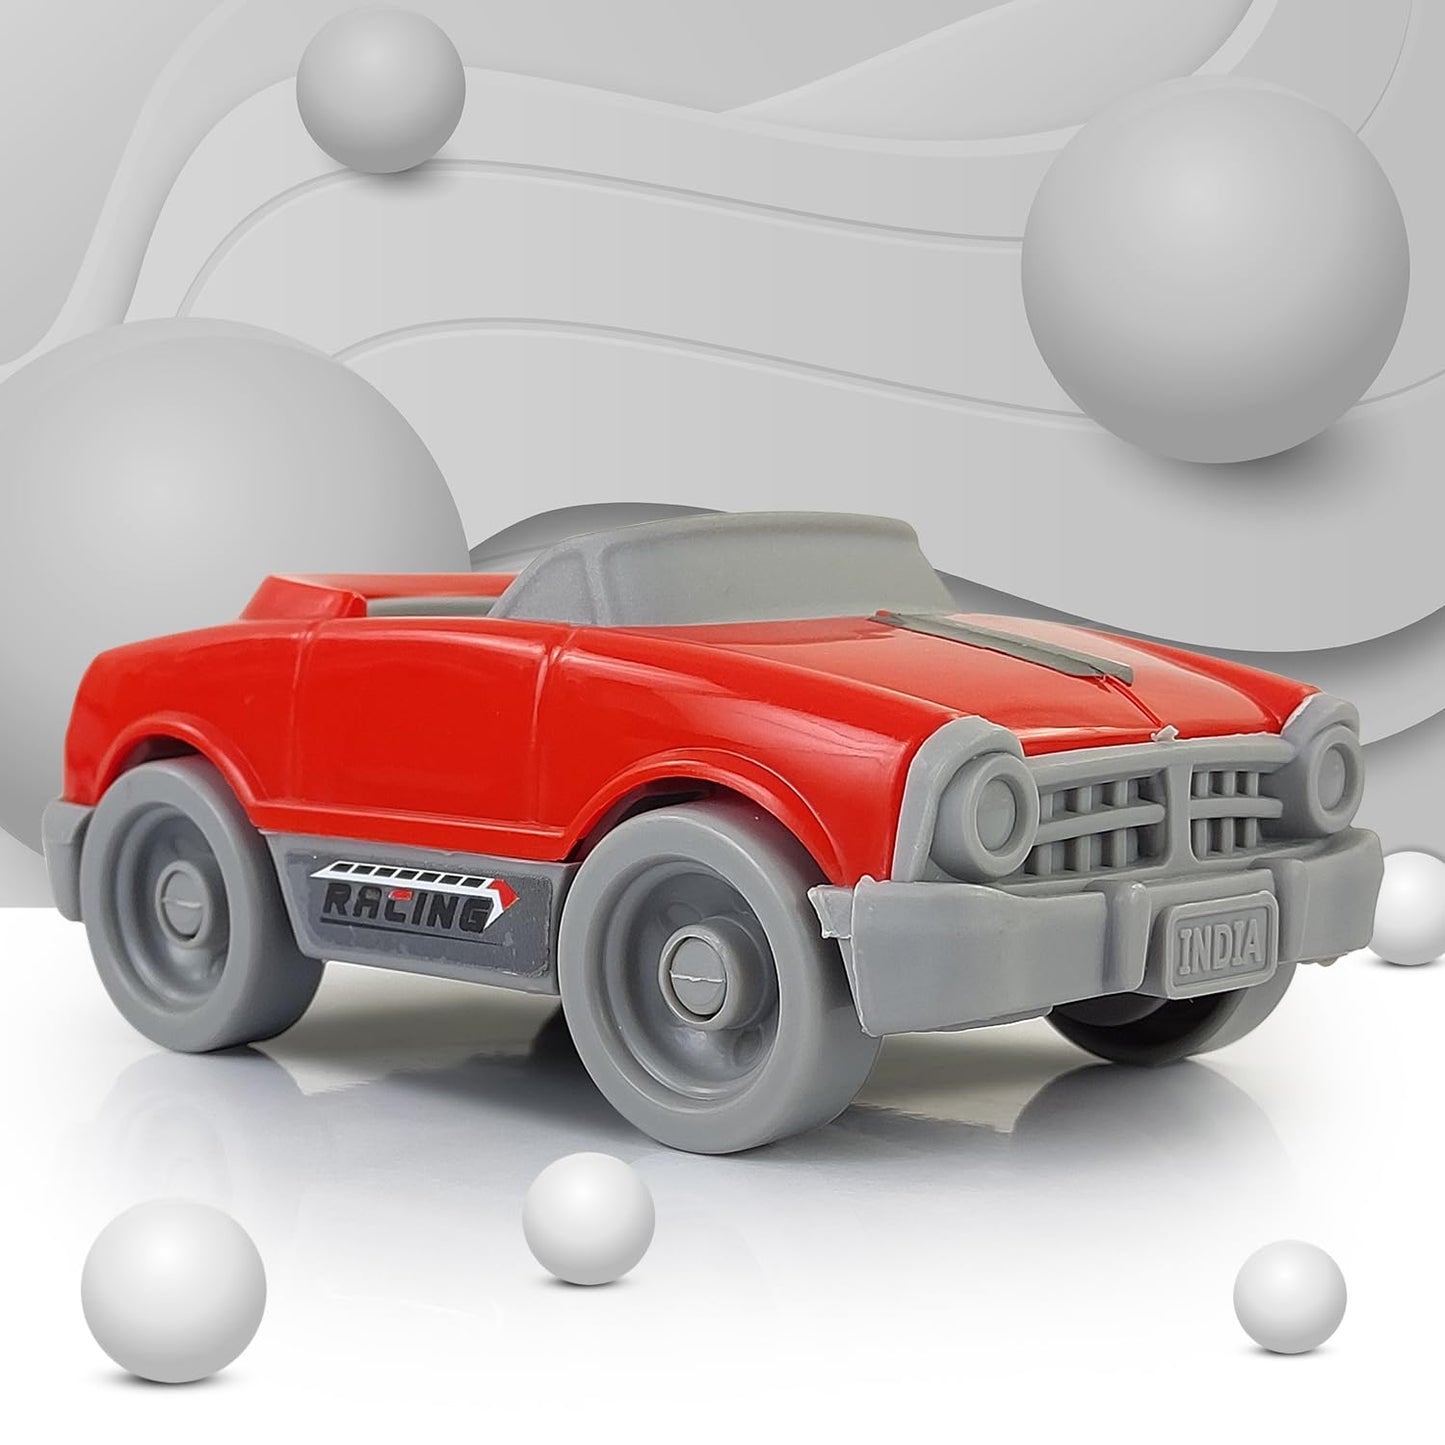 Speedy Wheels Pull & Push Racing Toy Cars Set